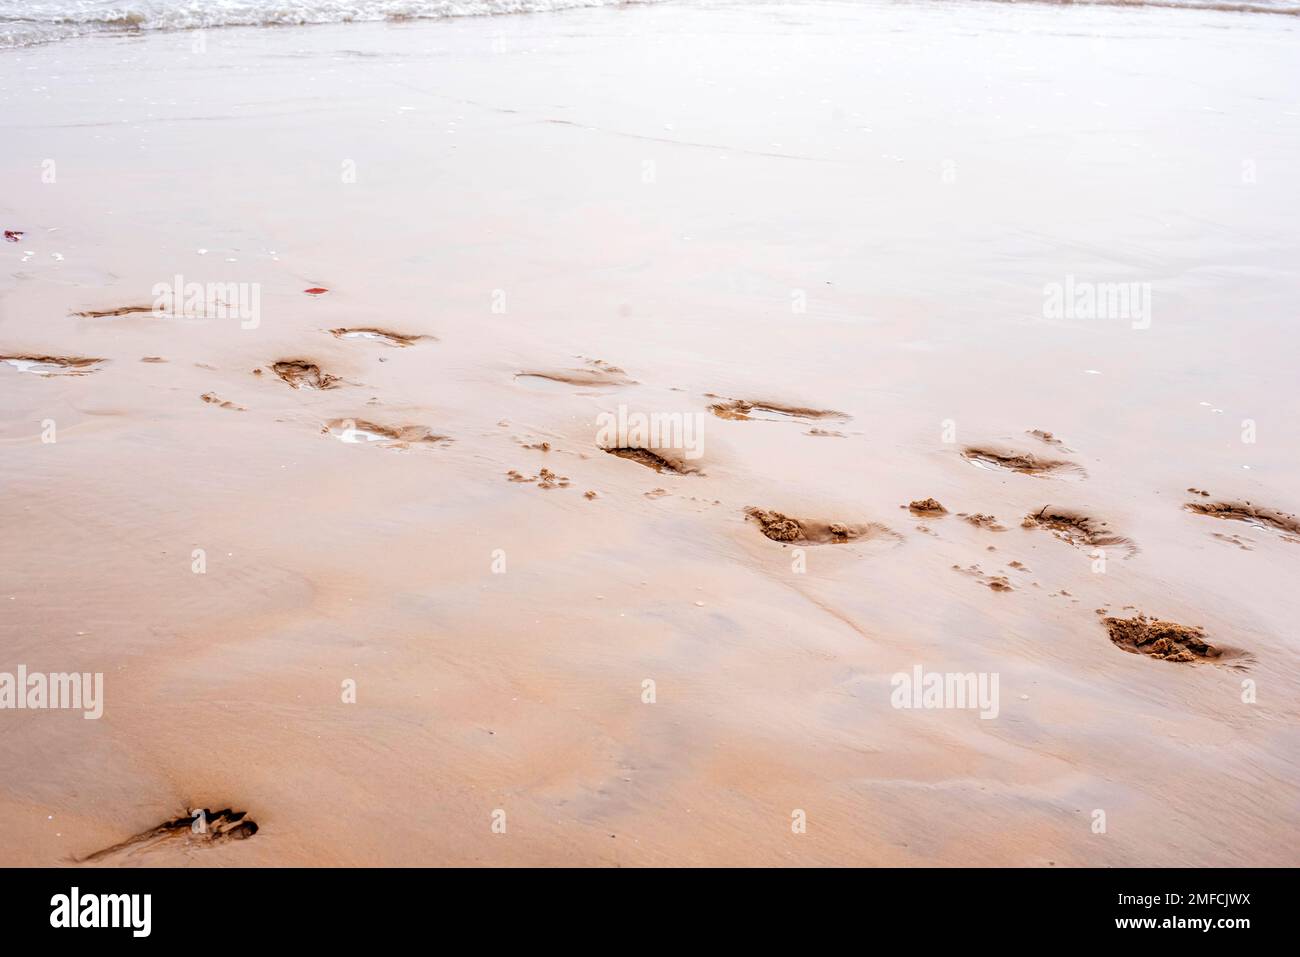 Close-up of footprints on empty beach sand. Stock Photo